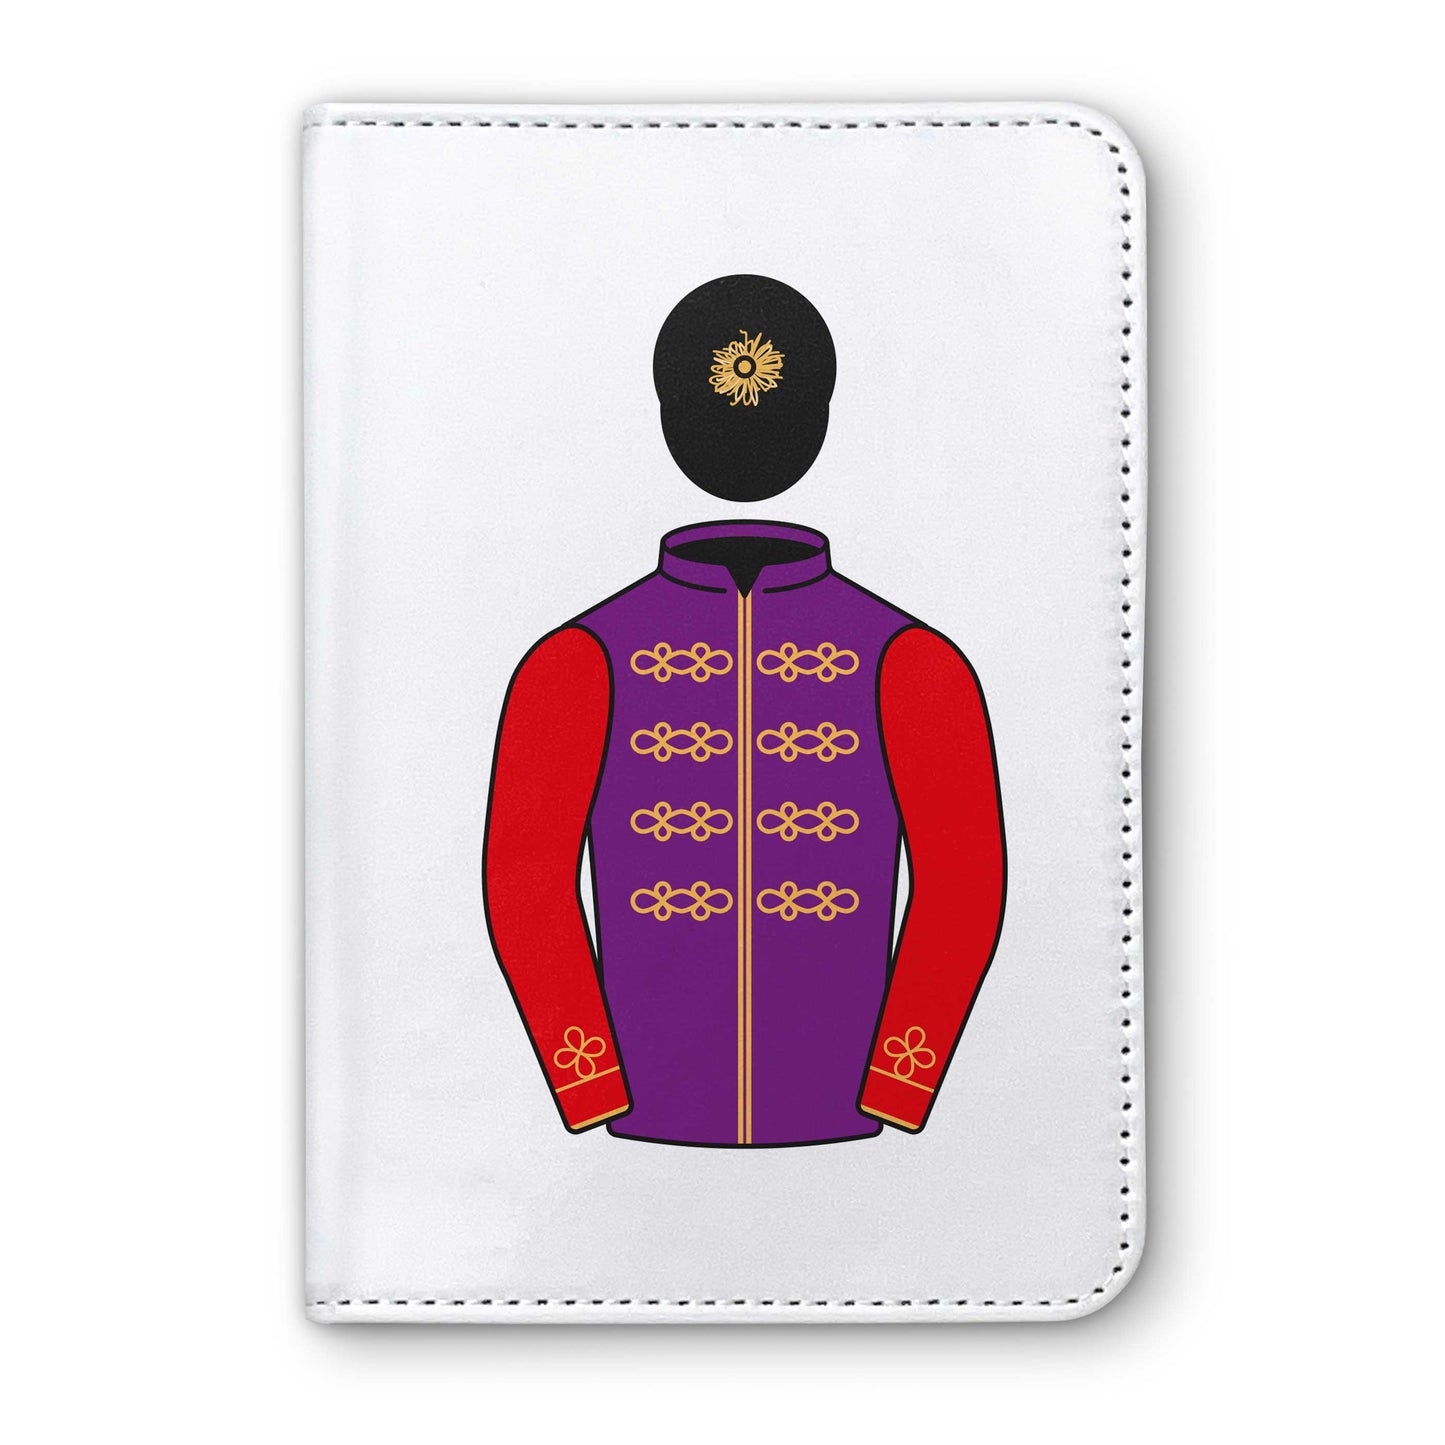 The Queen Horse Racing Passport Holder - Hacked Up Horse Racing Gifts